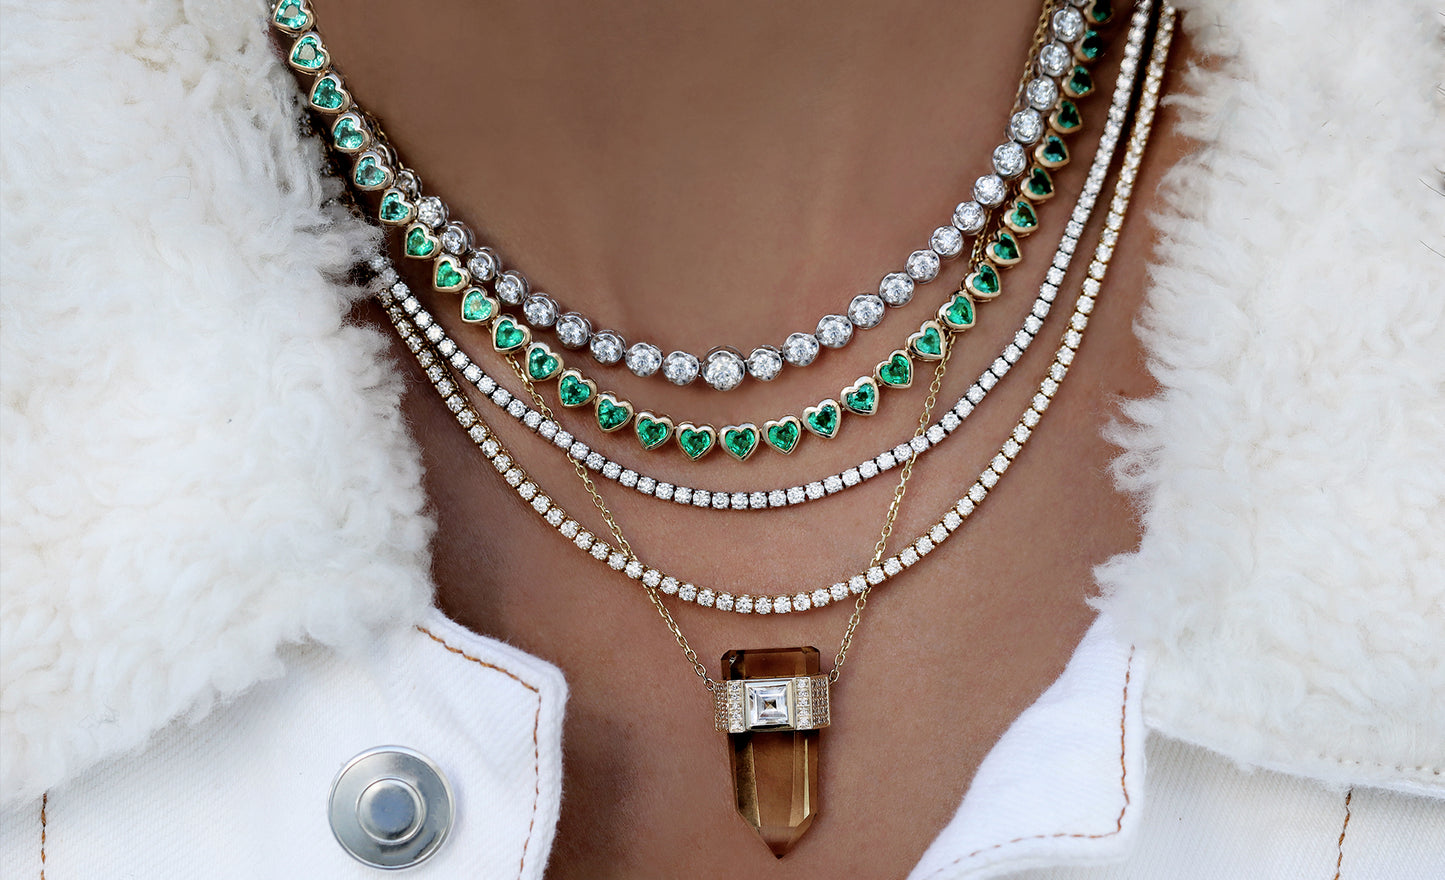 14kt gold graduated diamond scalloped bezel tennis necklace